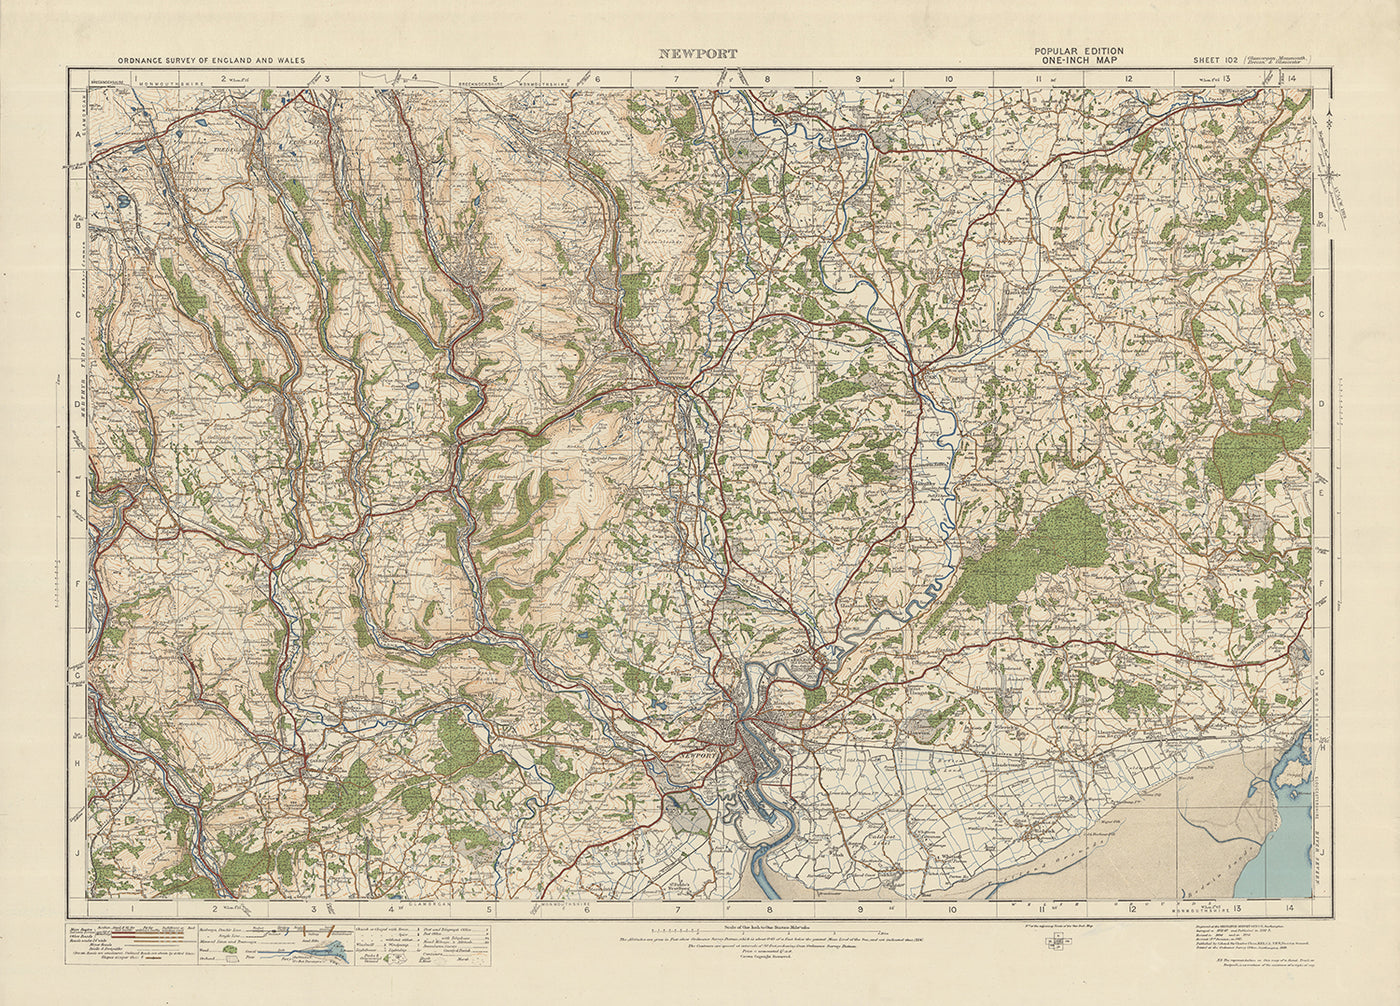 Old Ordnance Survey Map, Blatt 102 – Newport, 1925: Cwmbran, Pontypool, Abertillery, Blackwood, Caerphilly